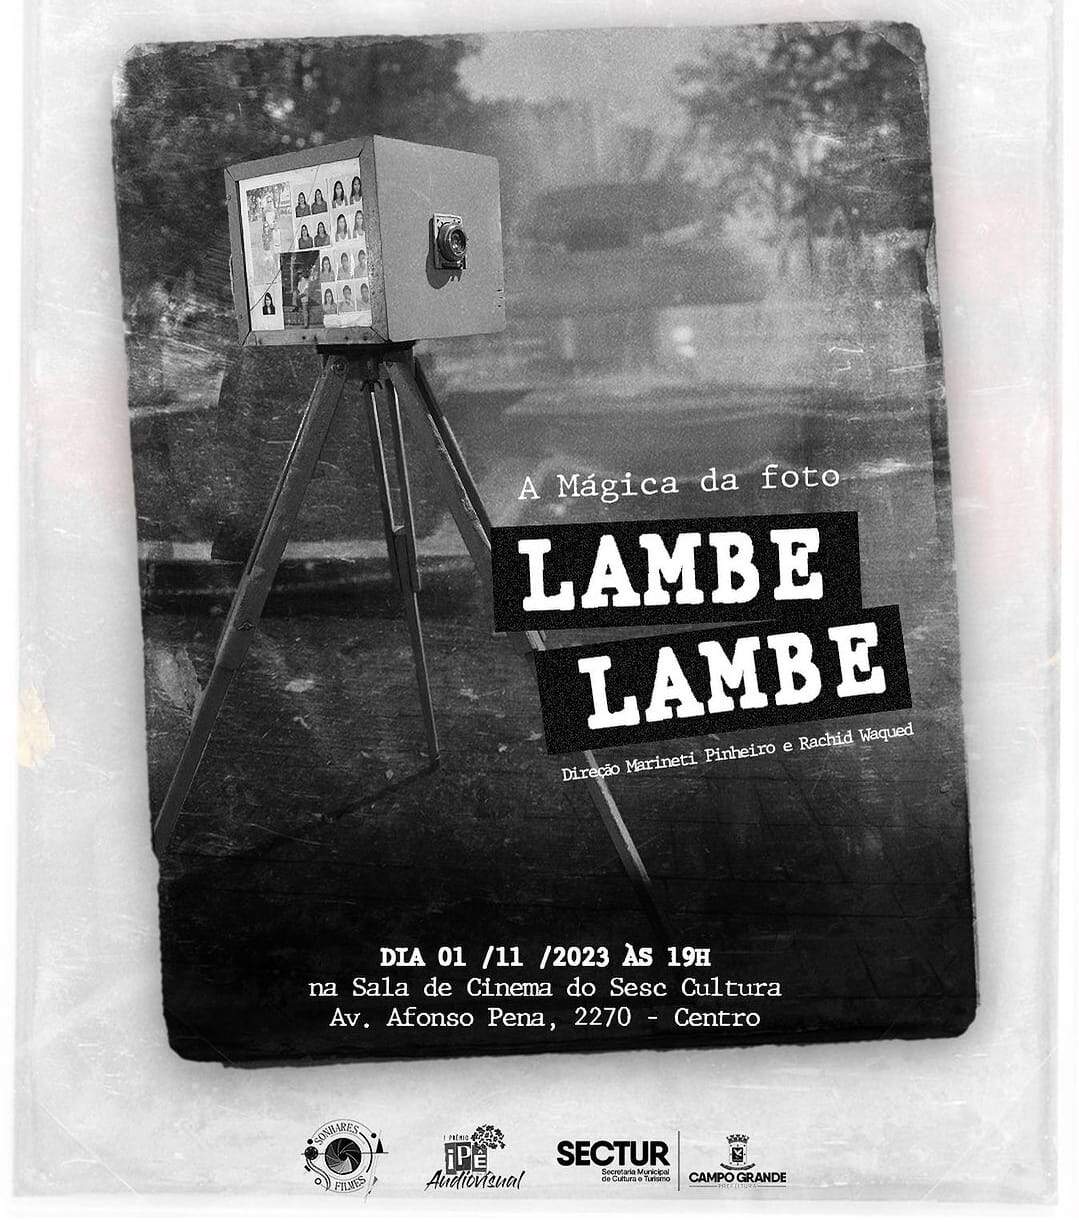 Curta-metragem sobre fotógrafos lambe lambe será exibido nesta semana